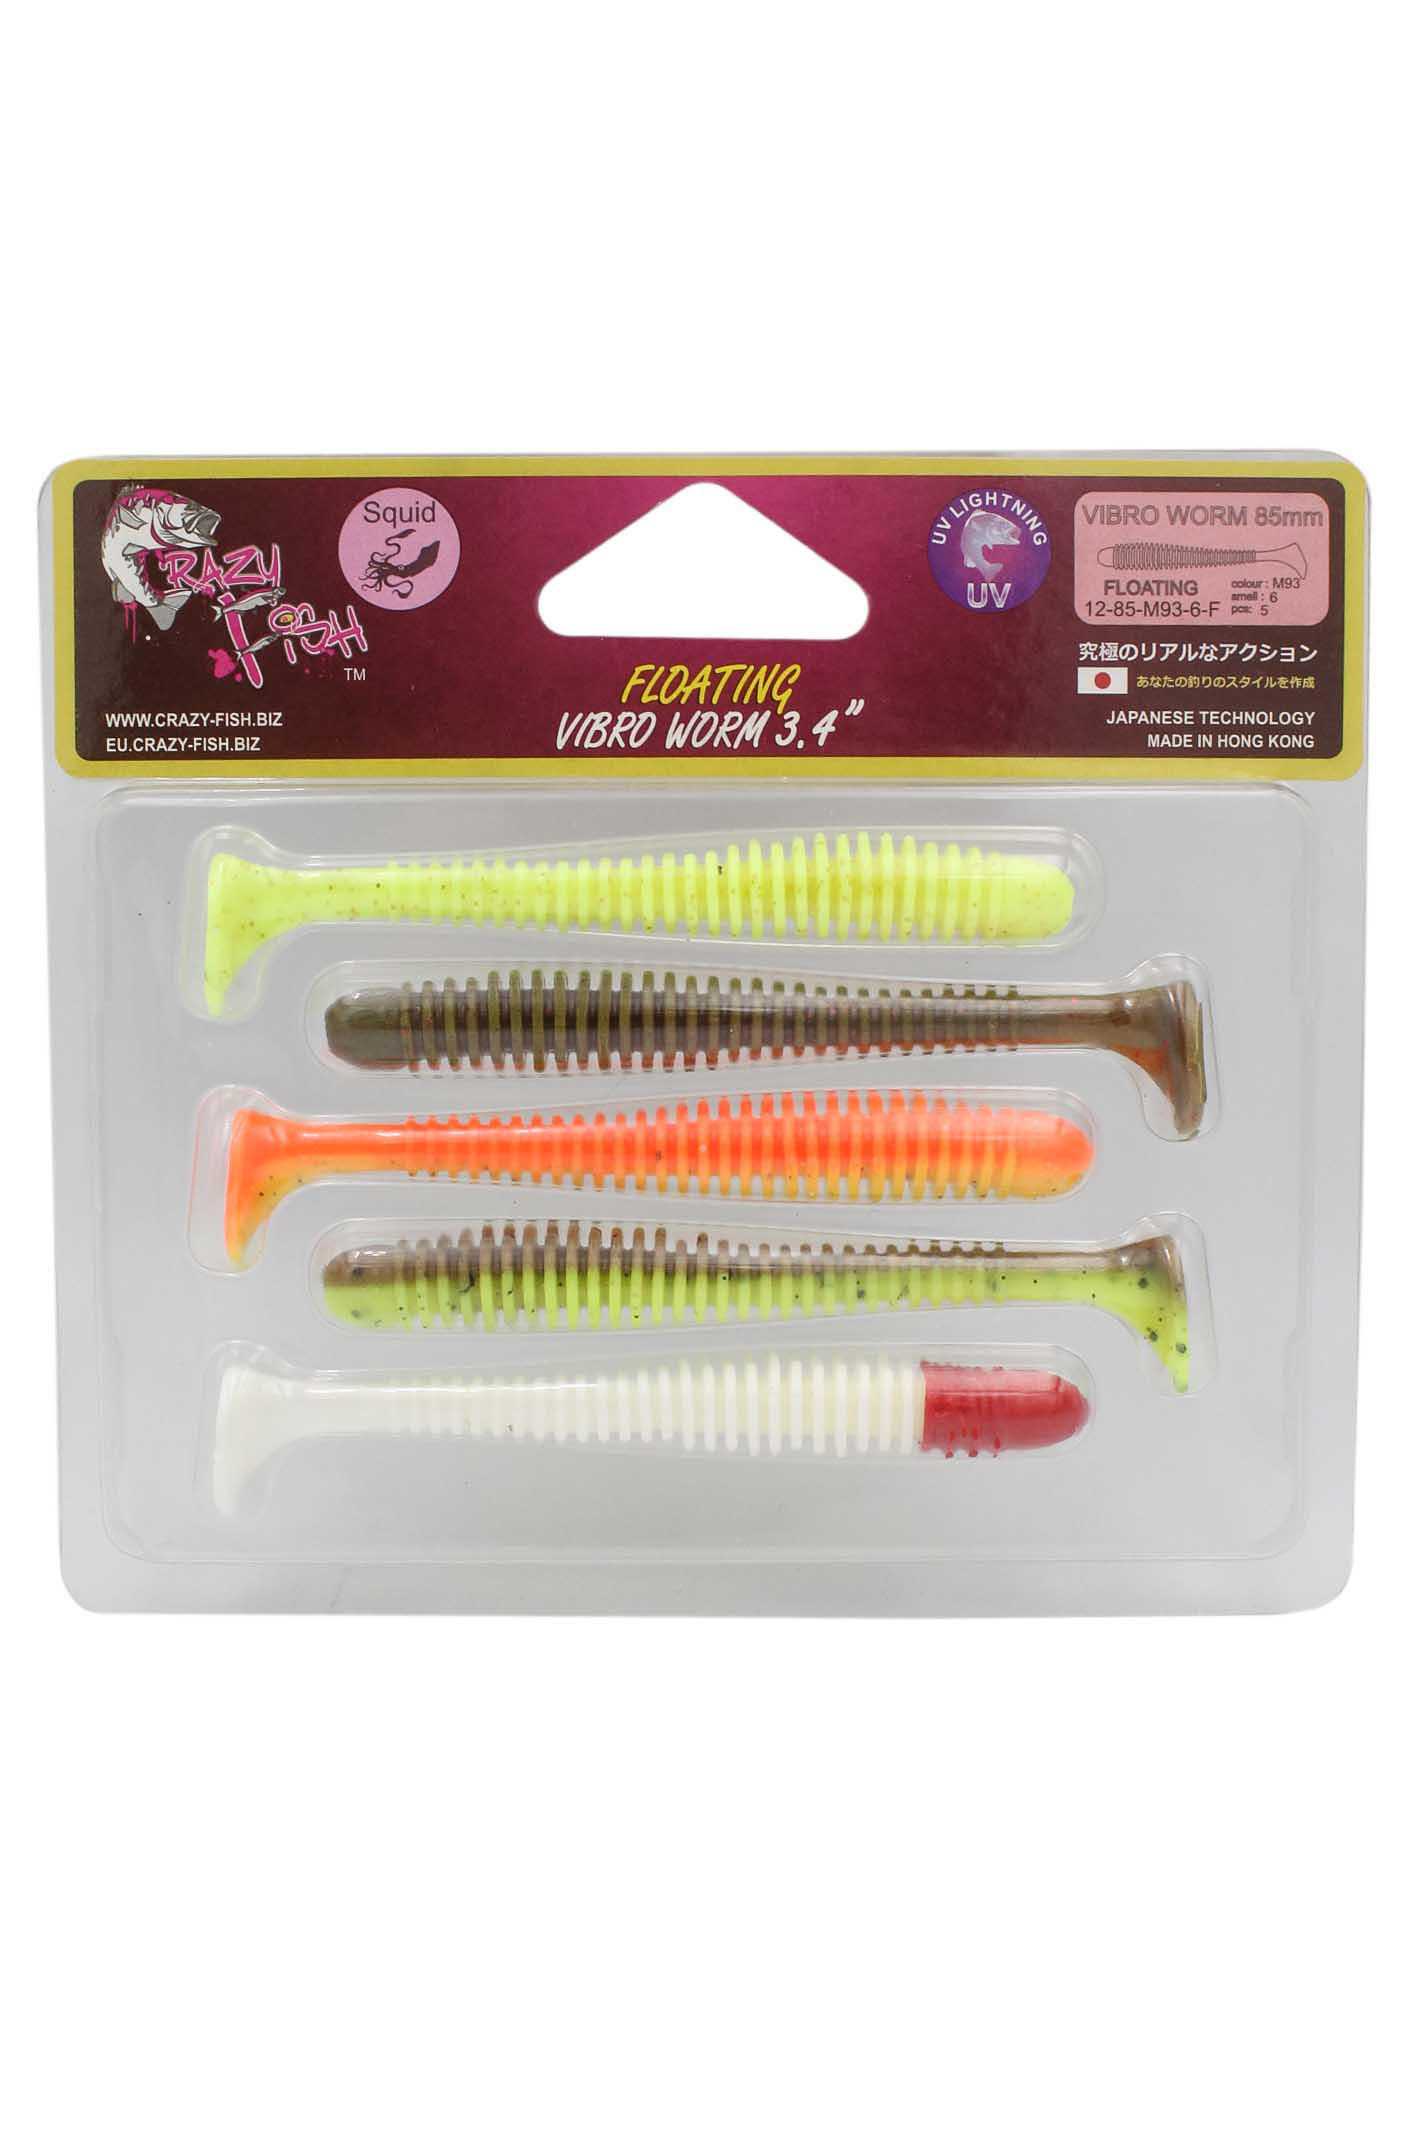 Приманка Crazy Fish Vibro worm 3,4" 12-85-M93-6F